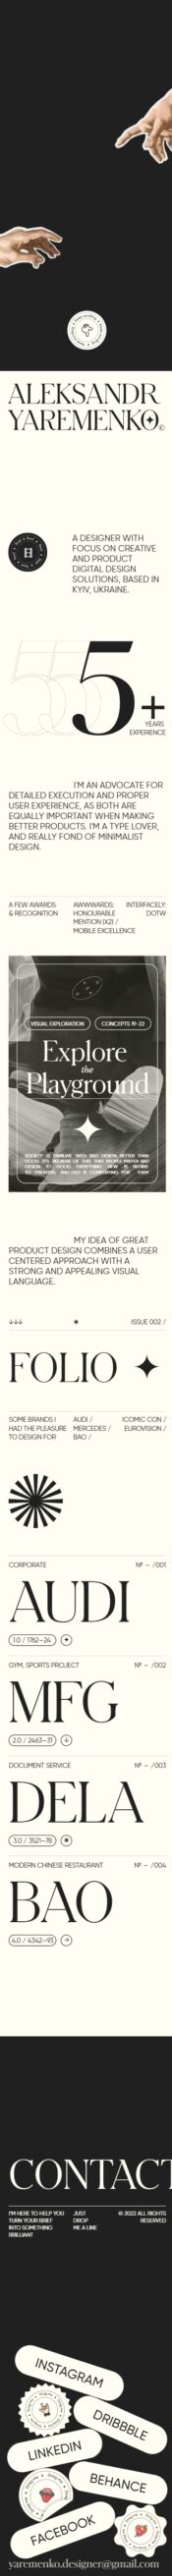 Aleksandr yaremenko – folio design agencies about page